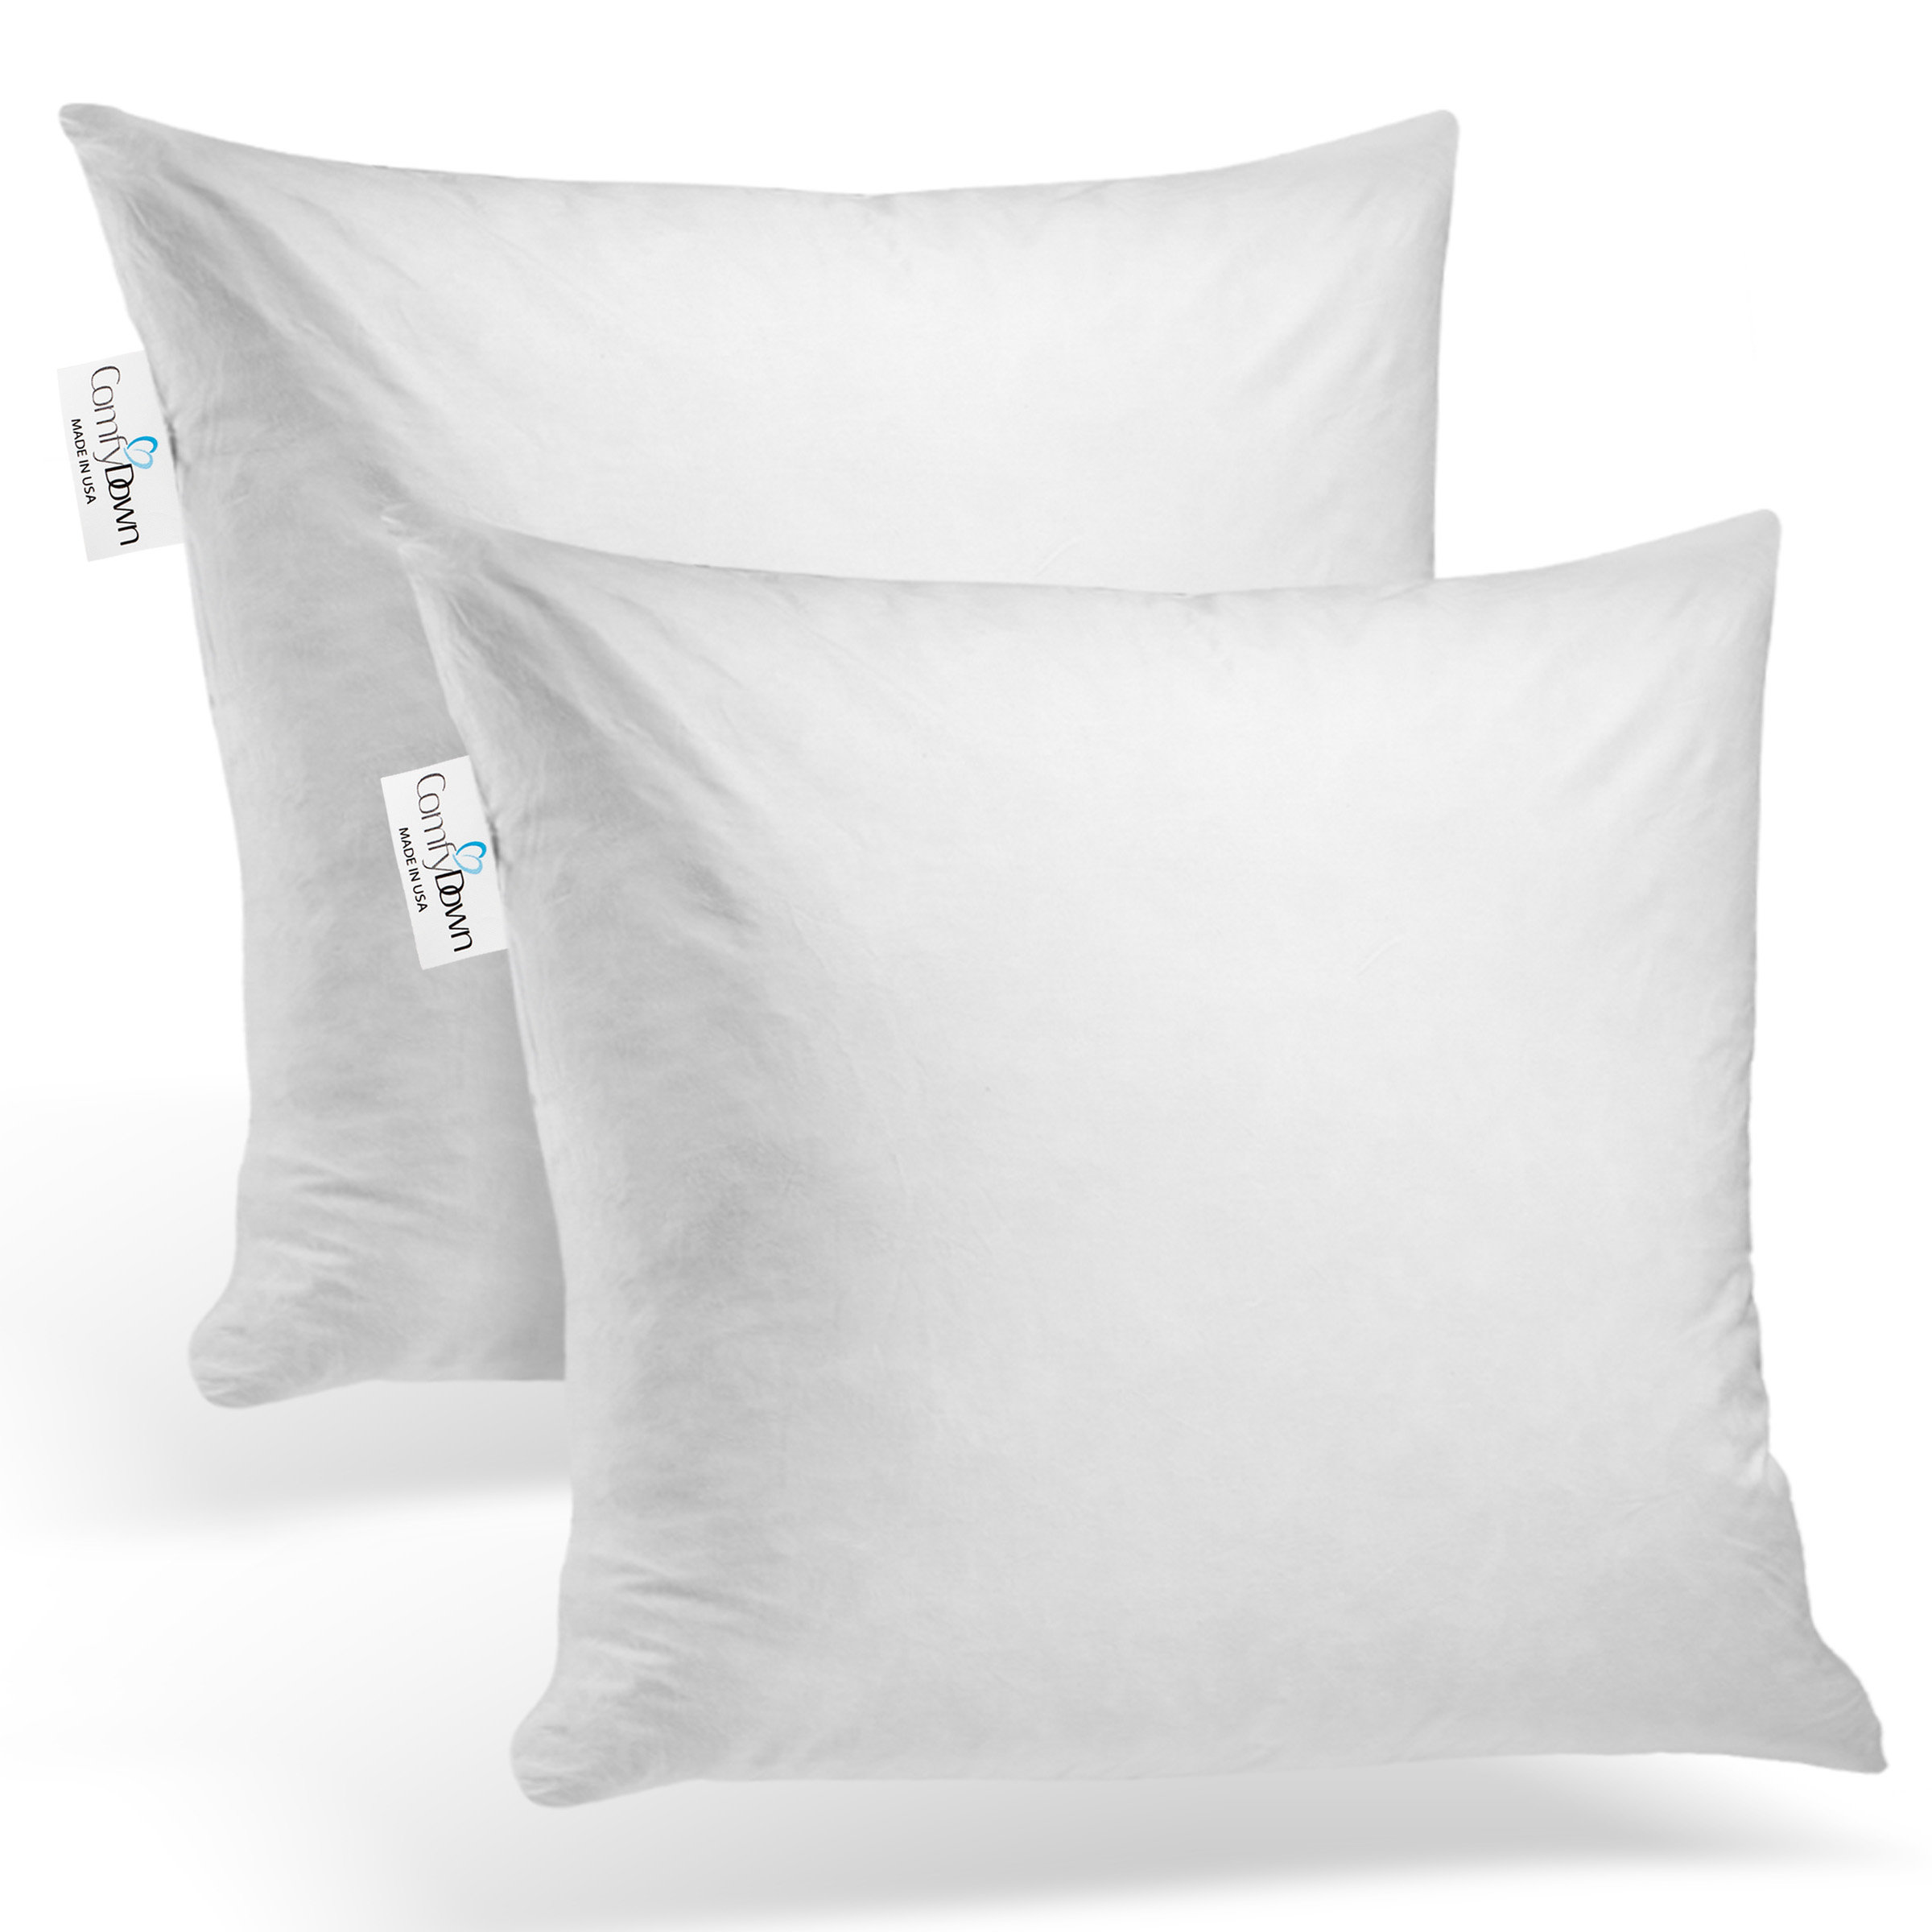 Pillow Insert Form Insert Sham Stuffer Square Polyester 16x16 Made in USA 